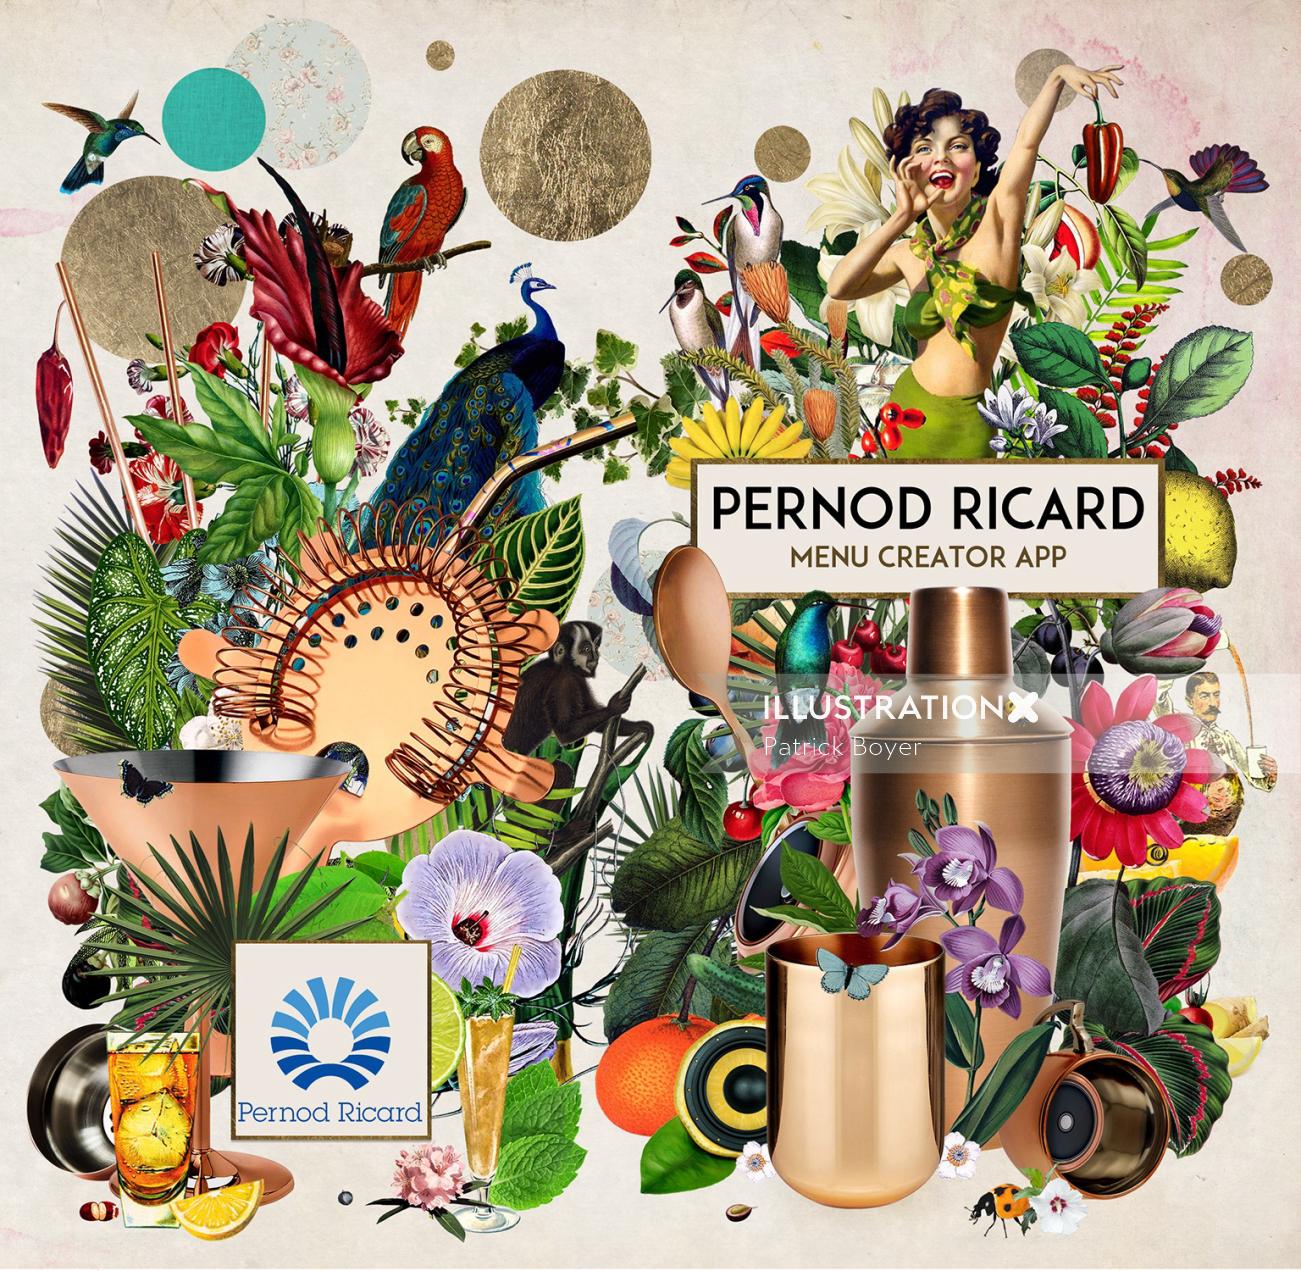 Pernod ricard advertising-graphic
